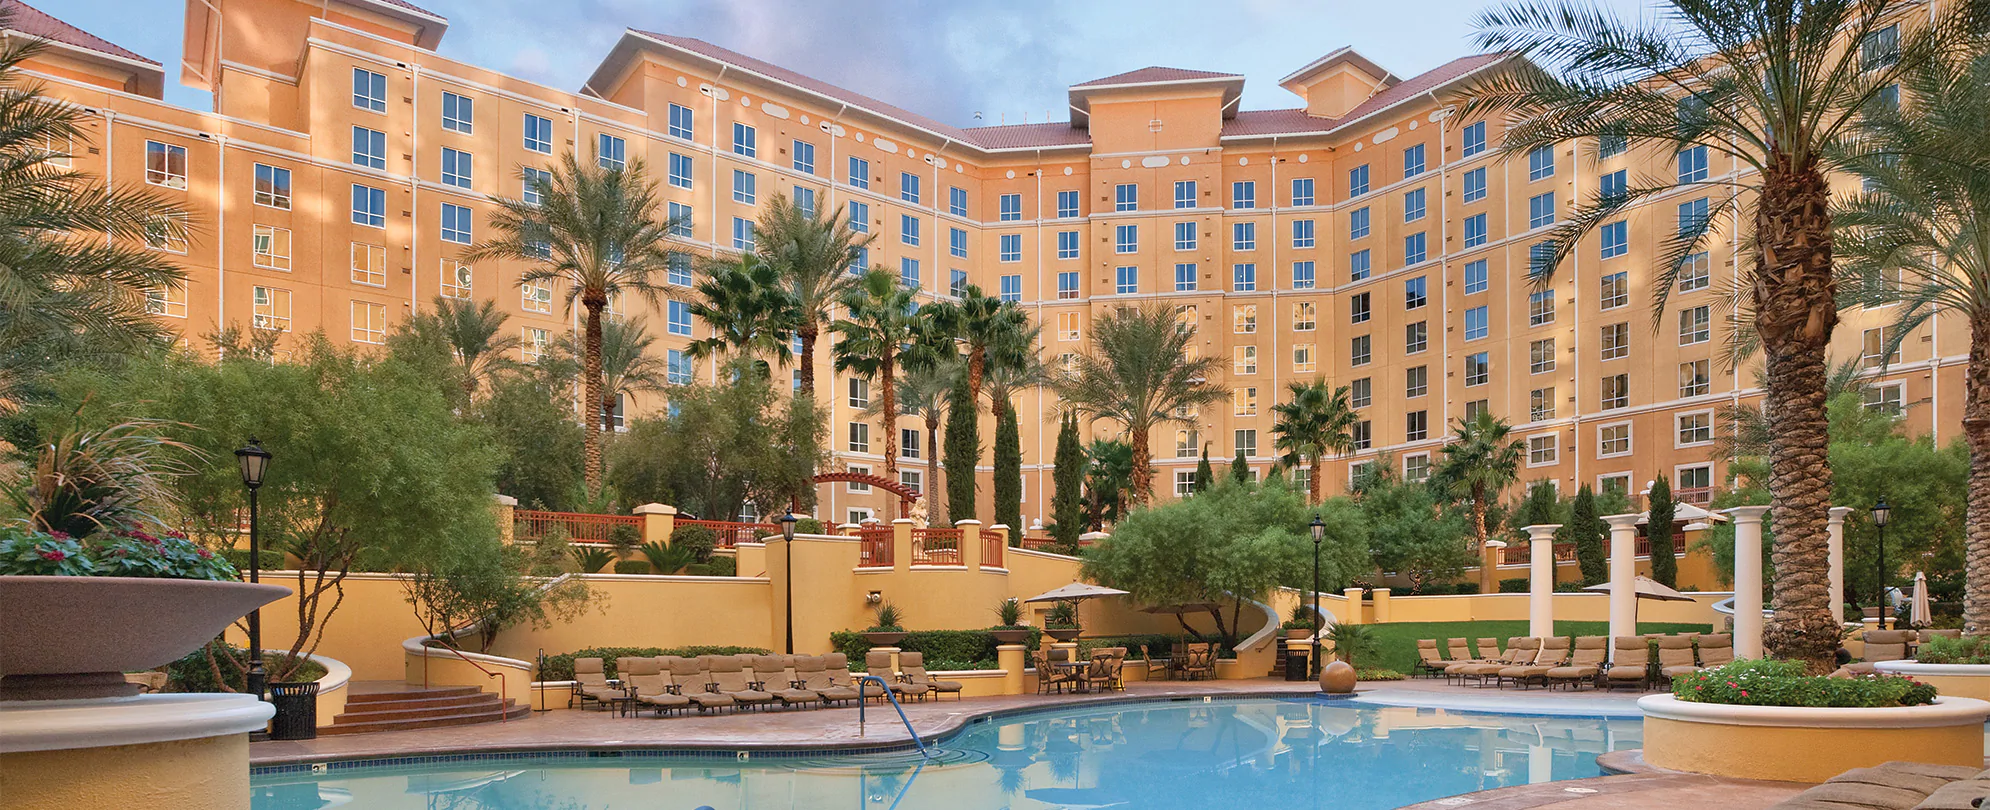 10 Best Rci Resorts In Las Vegas 2023 - Buyer's Guide